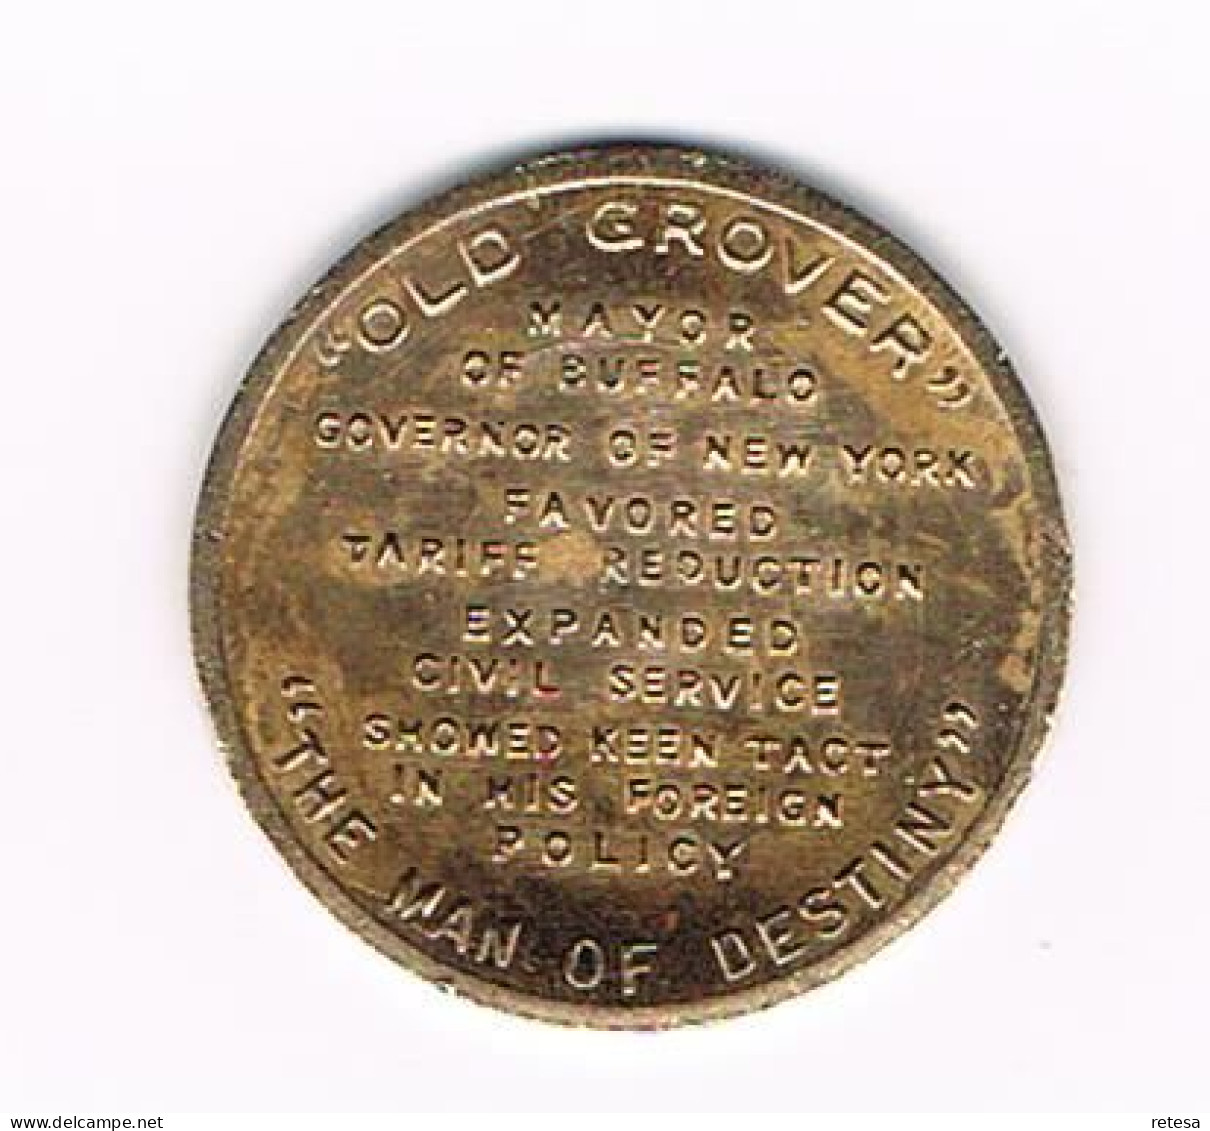 # PENNING  GROVER CLEVELAND 24 TH  PRESIDENT  U.S.A. - Monedas Elongadas (elongated Coins)